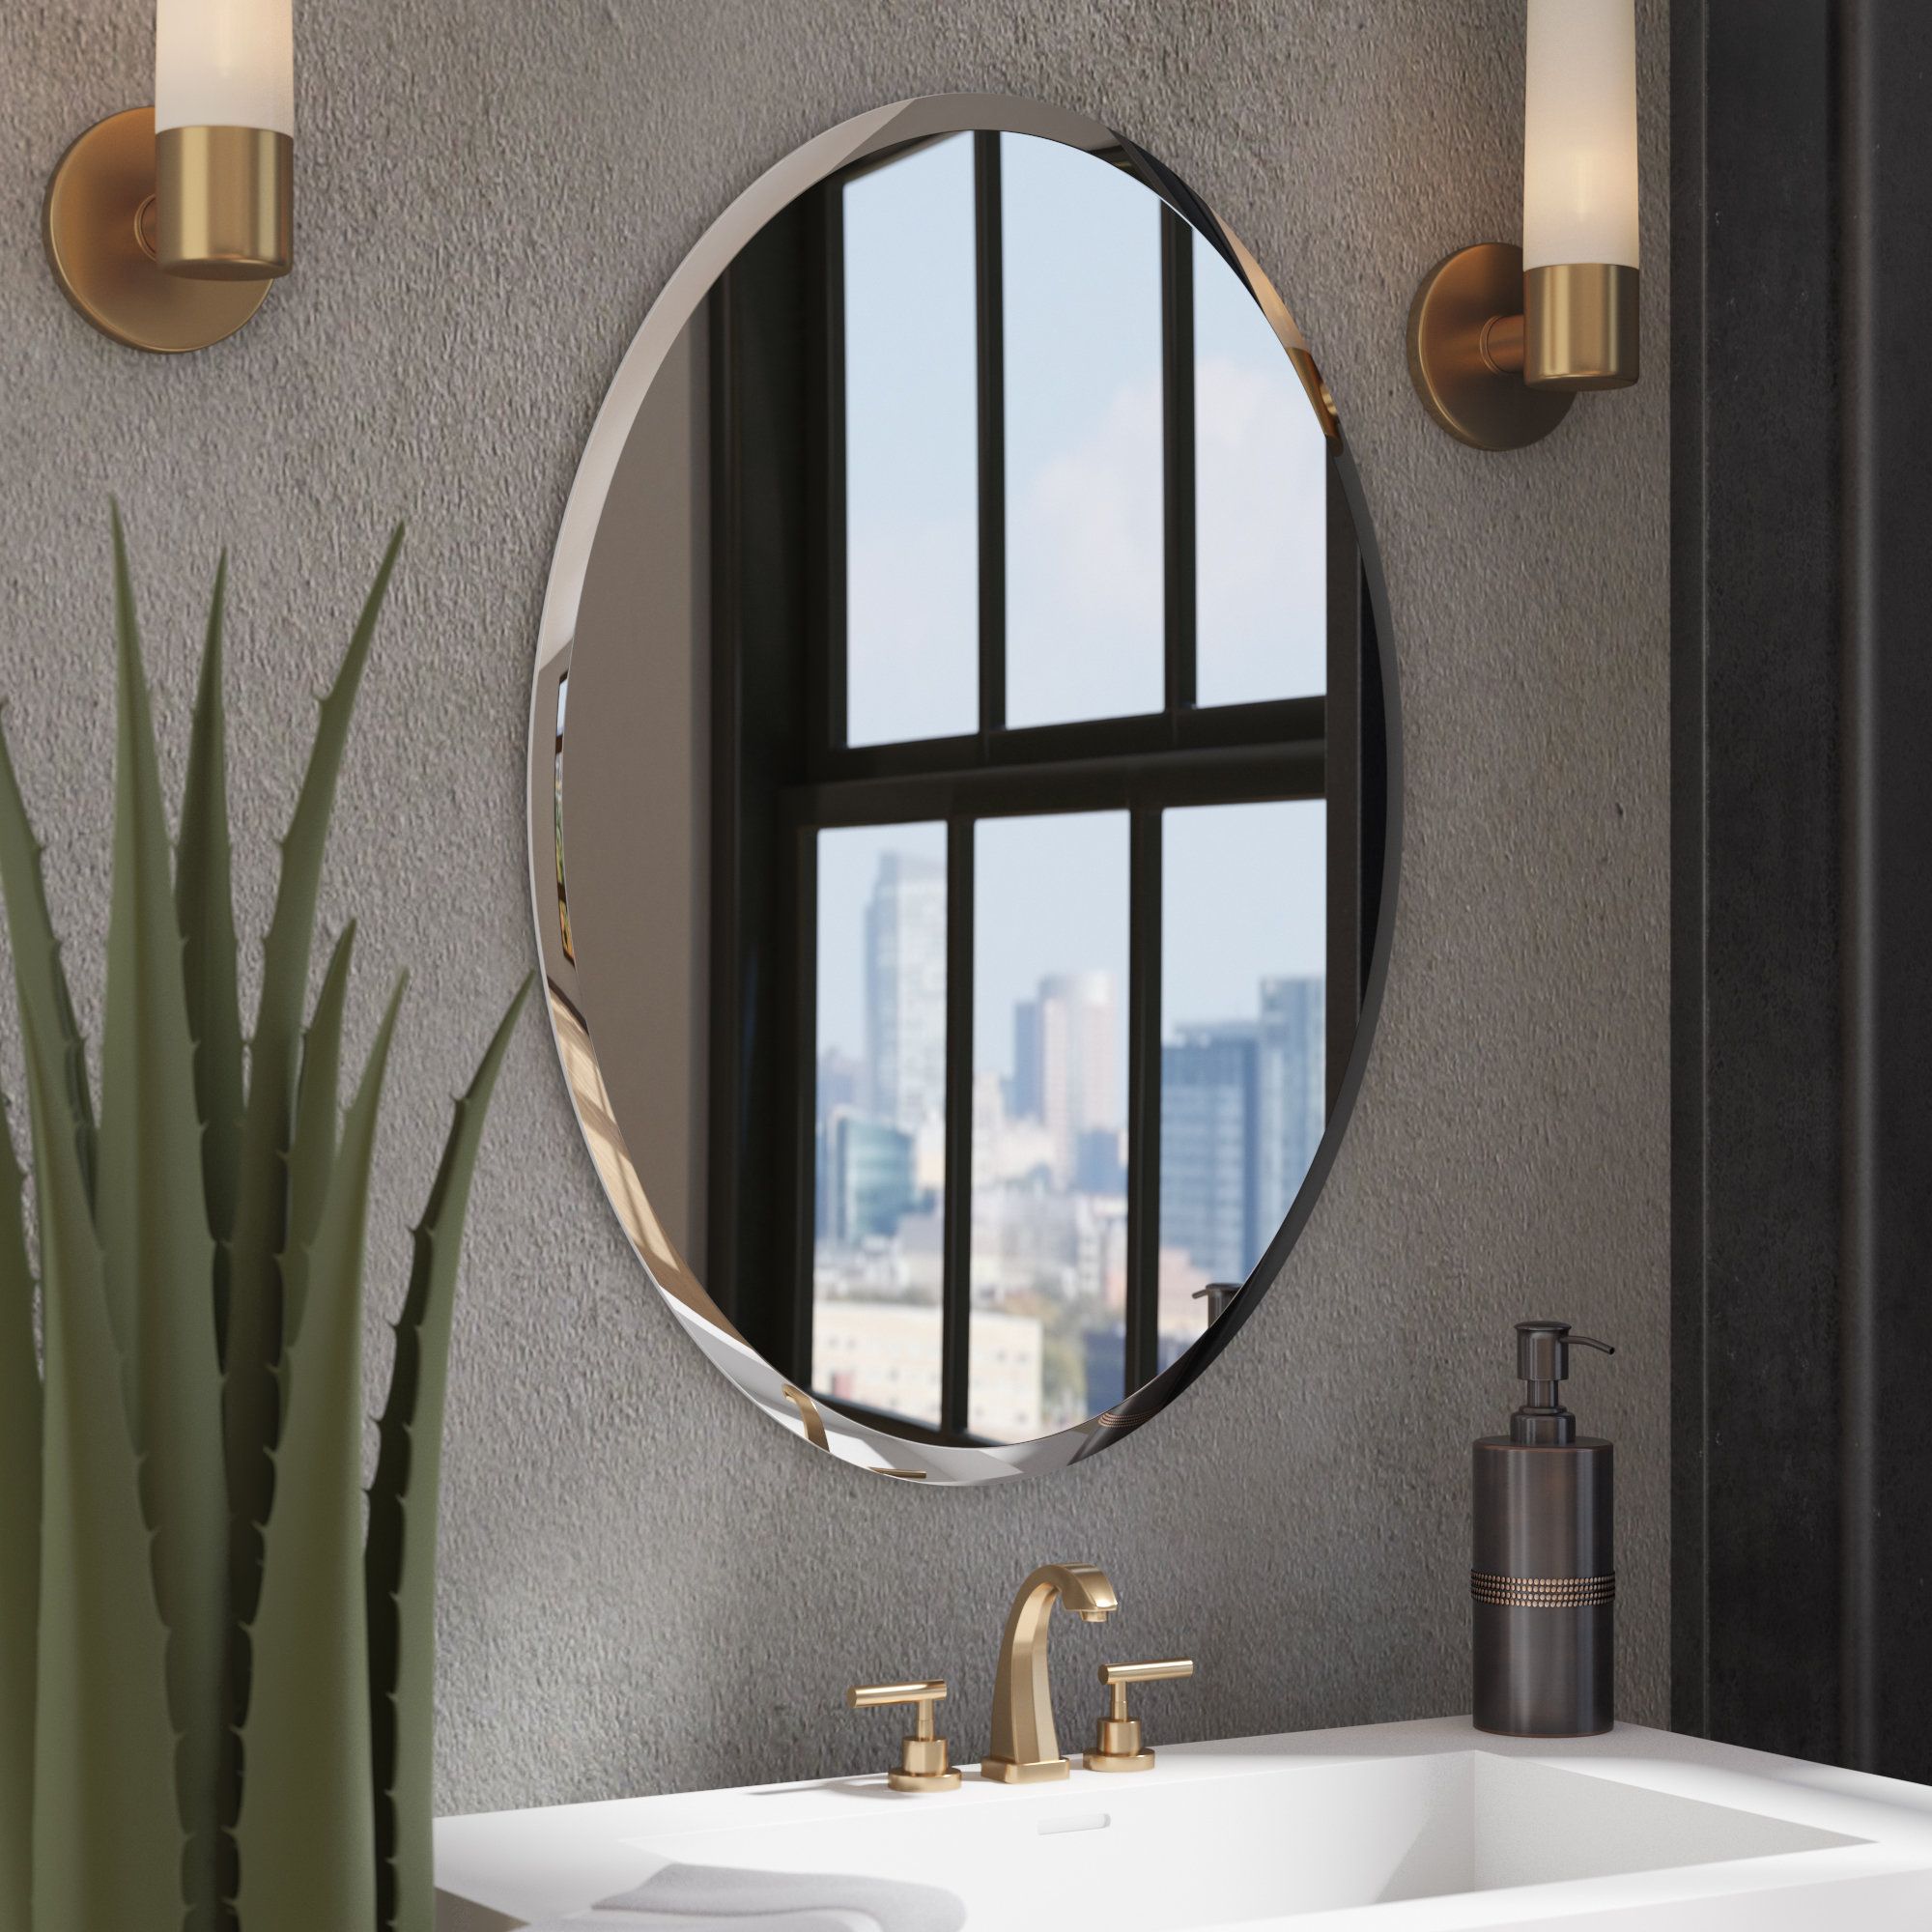 Kayden Bathroom Mirror With Regard To Most Recent Kayden Accent Mirrors (View 11 of 20)